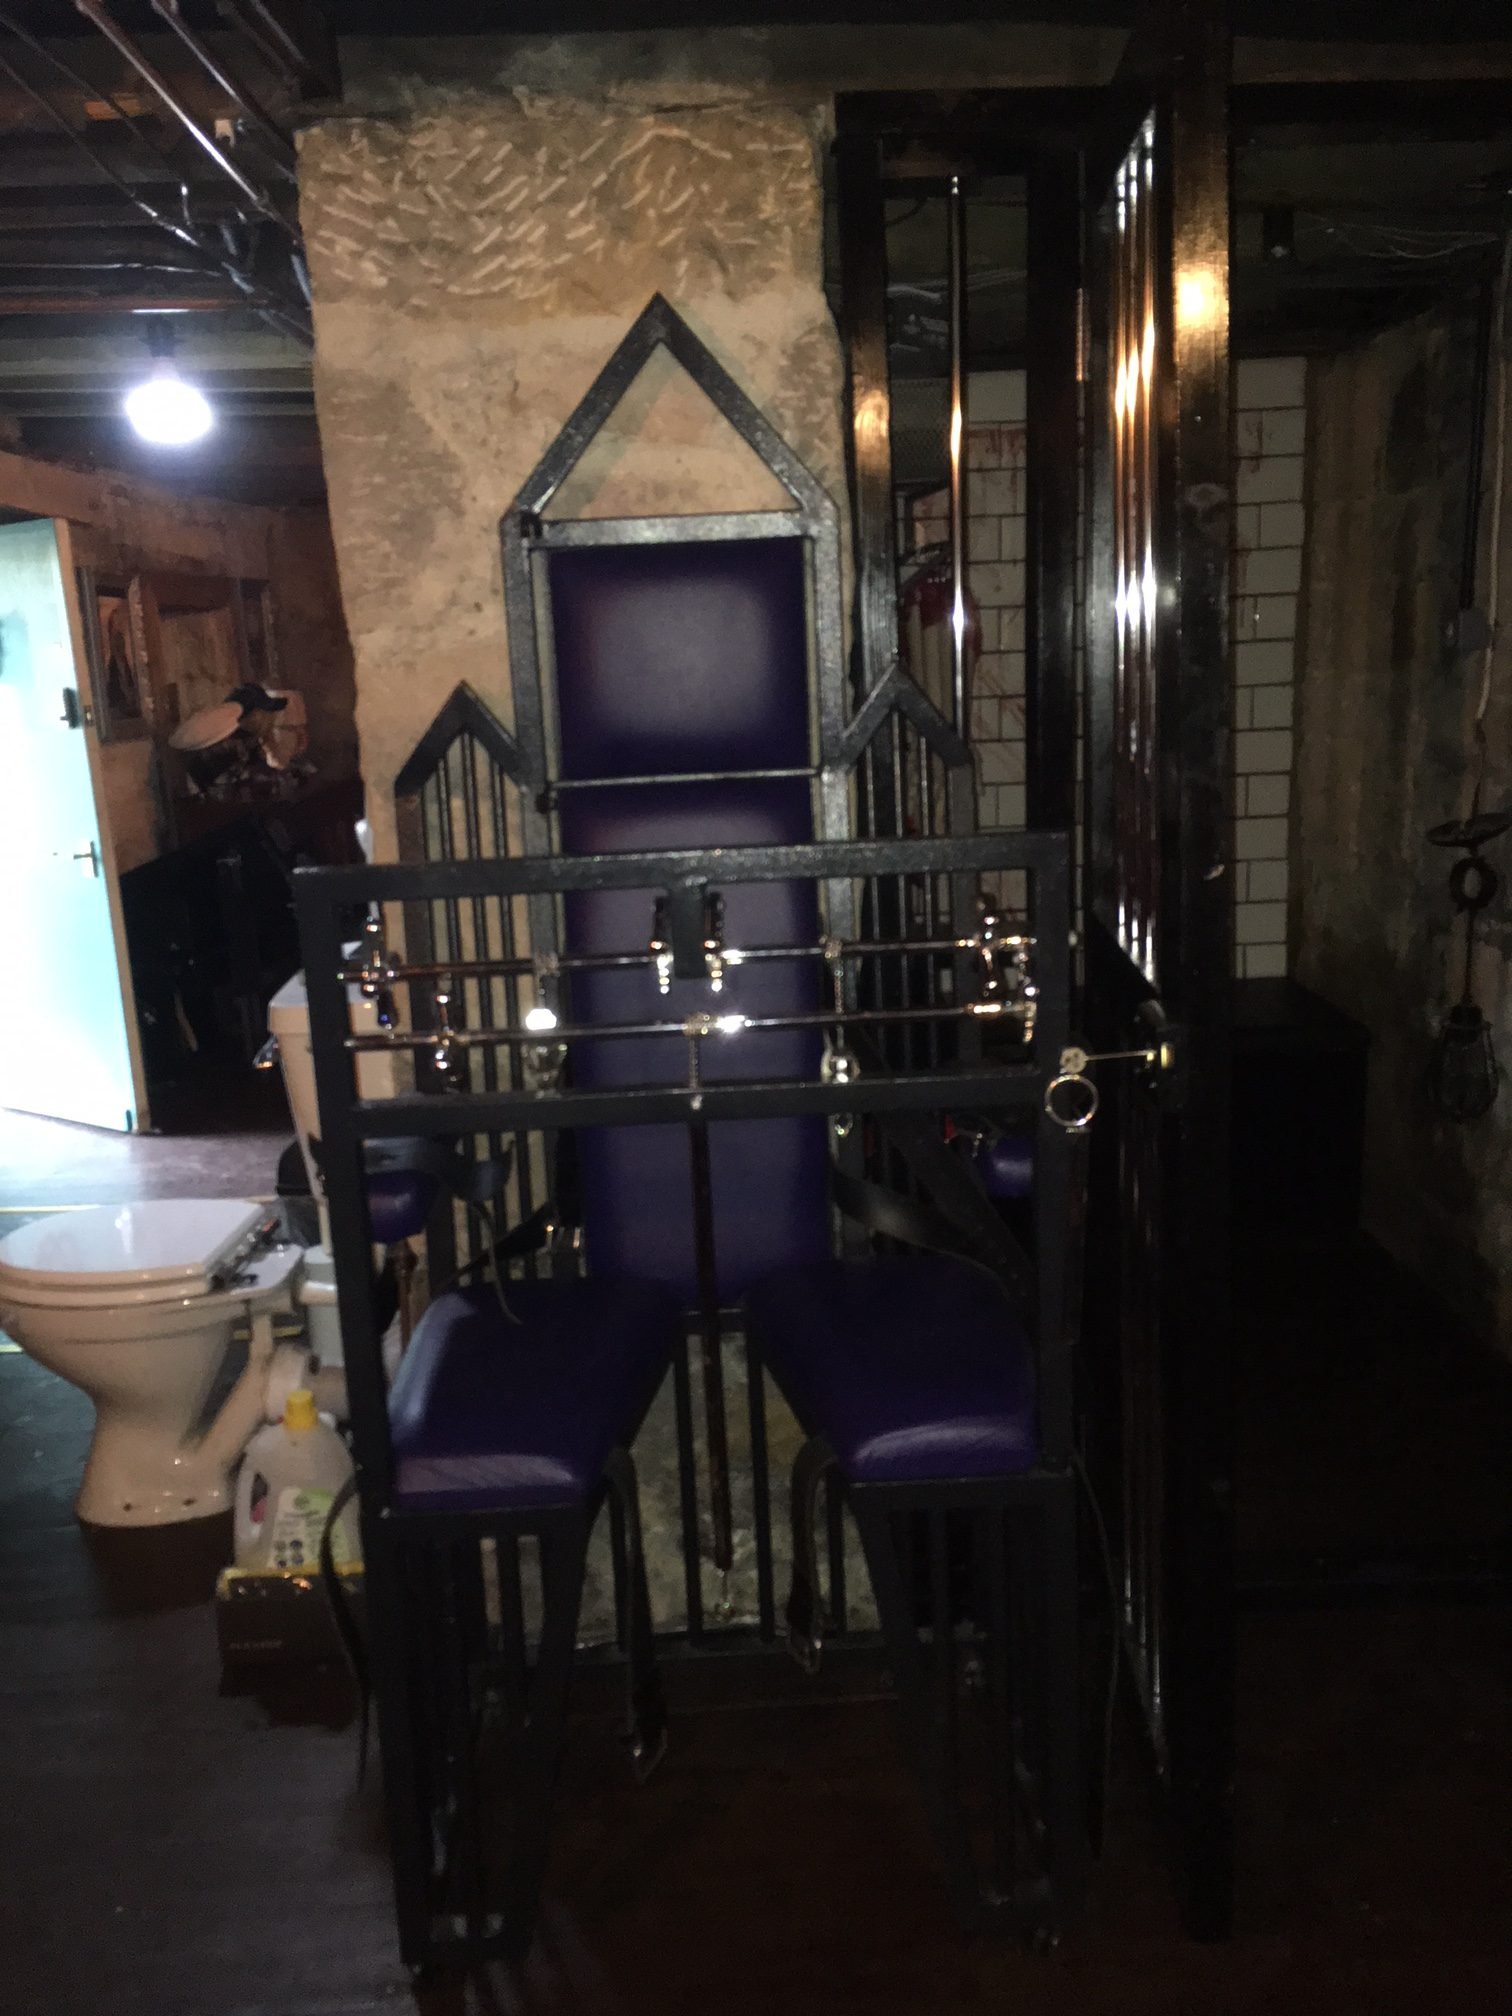 Bdsm toilet throne